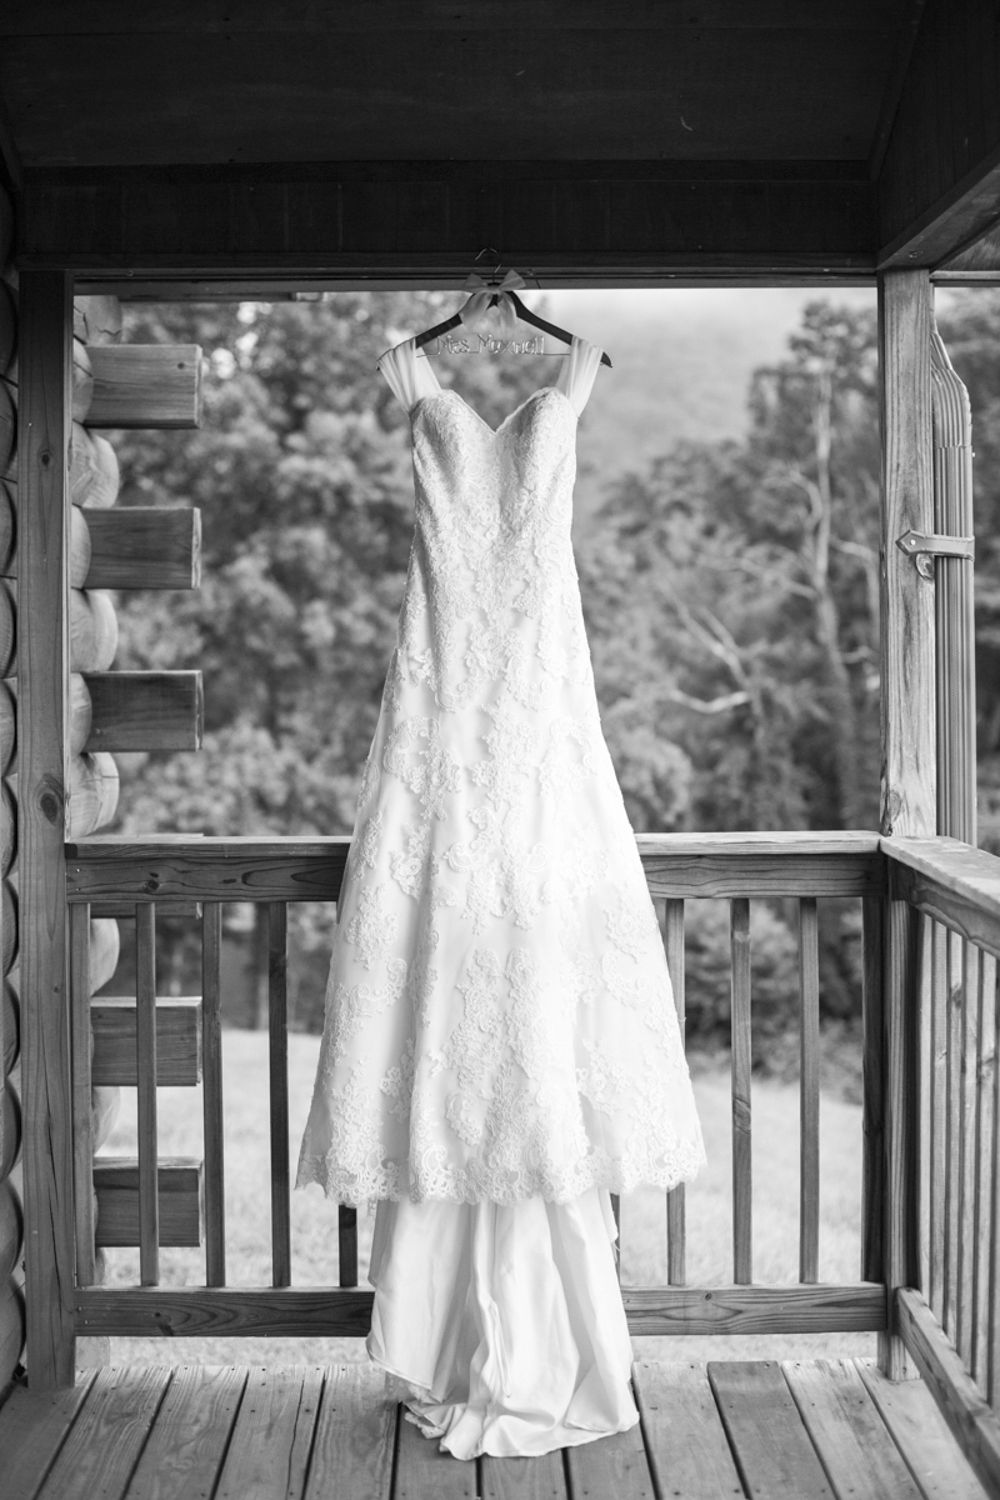 Hanging wedding dress at Engadine Inn Wedding Photography